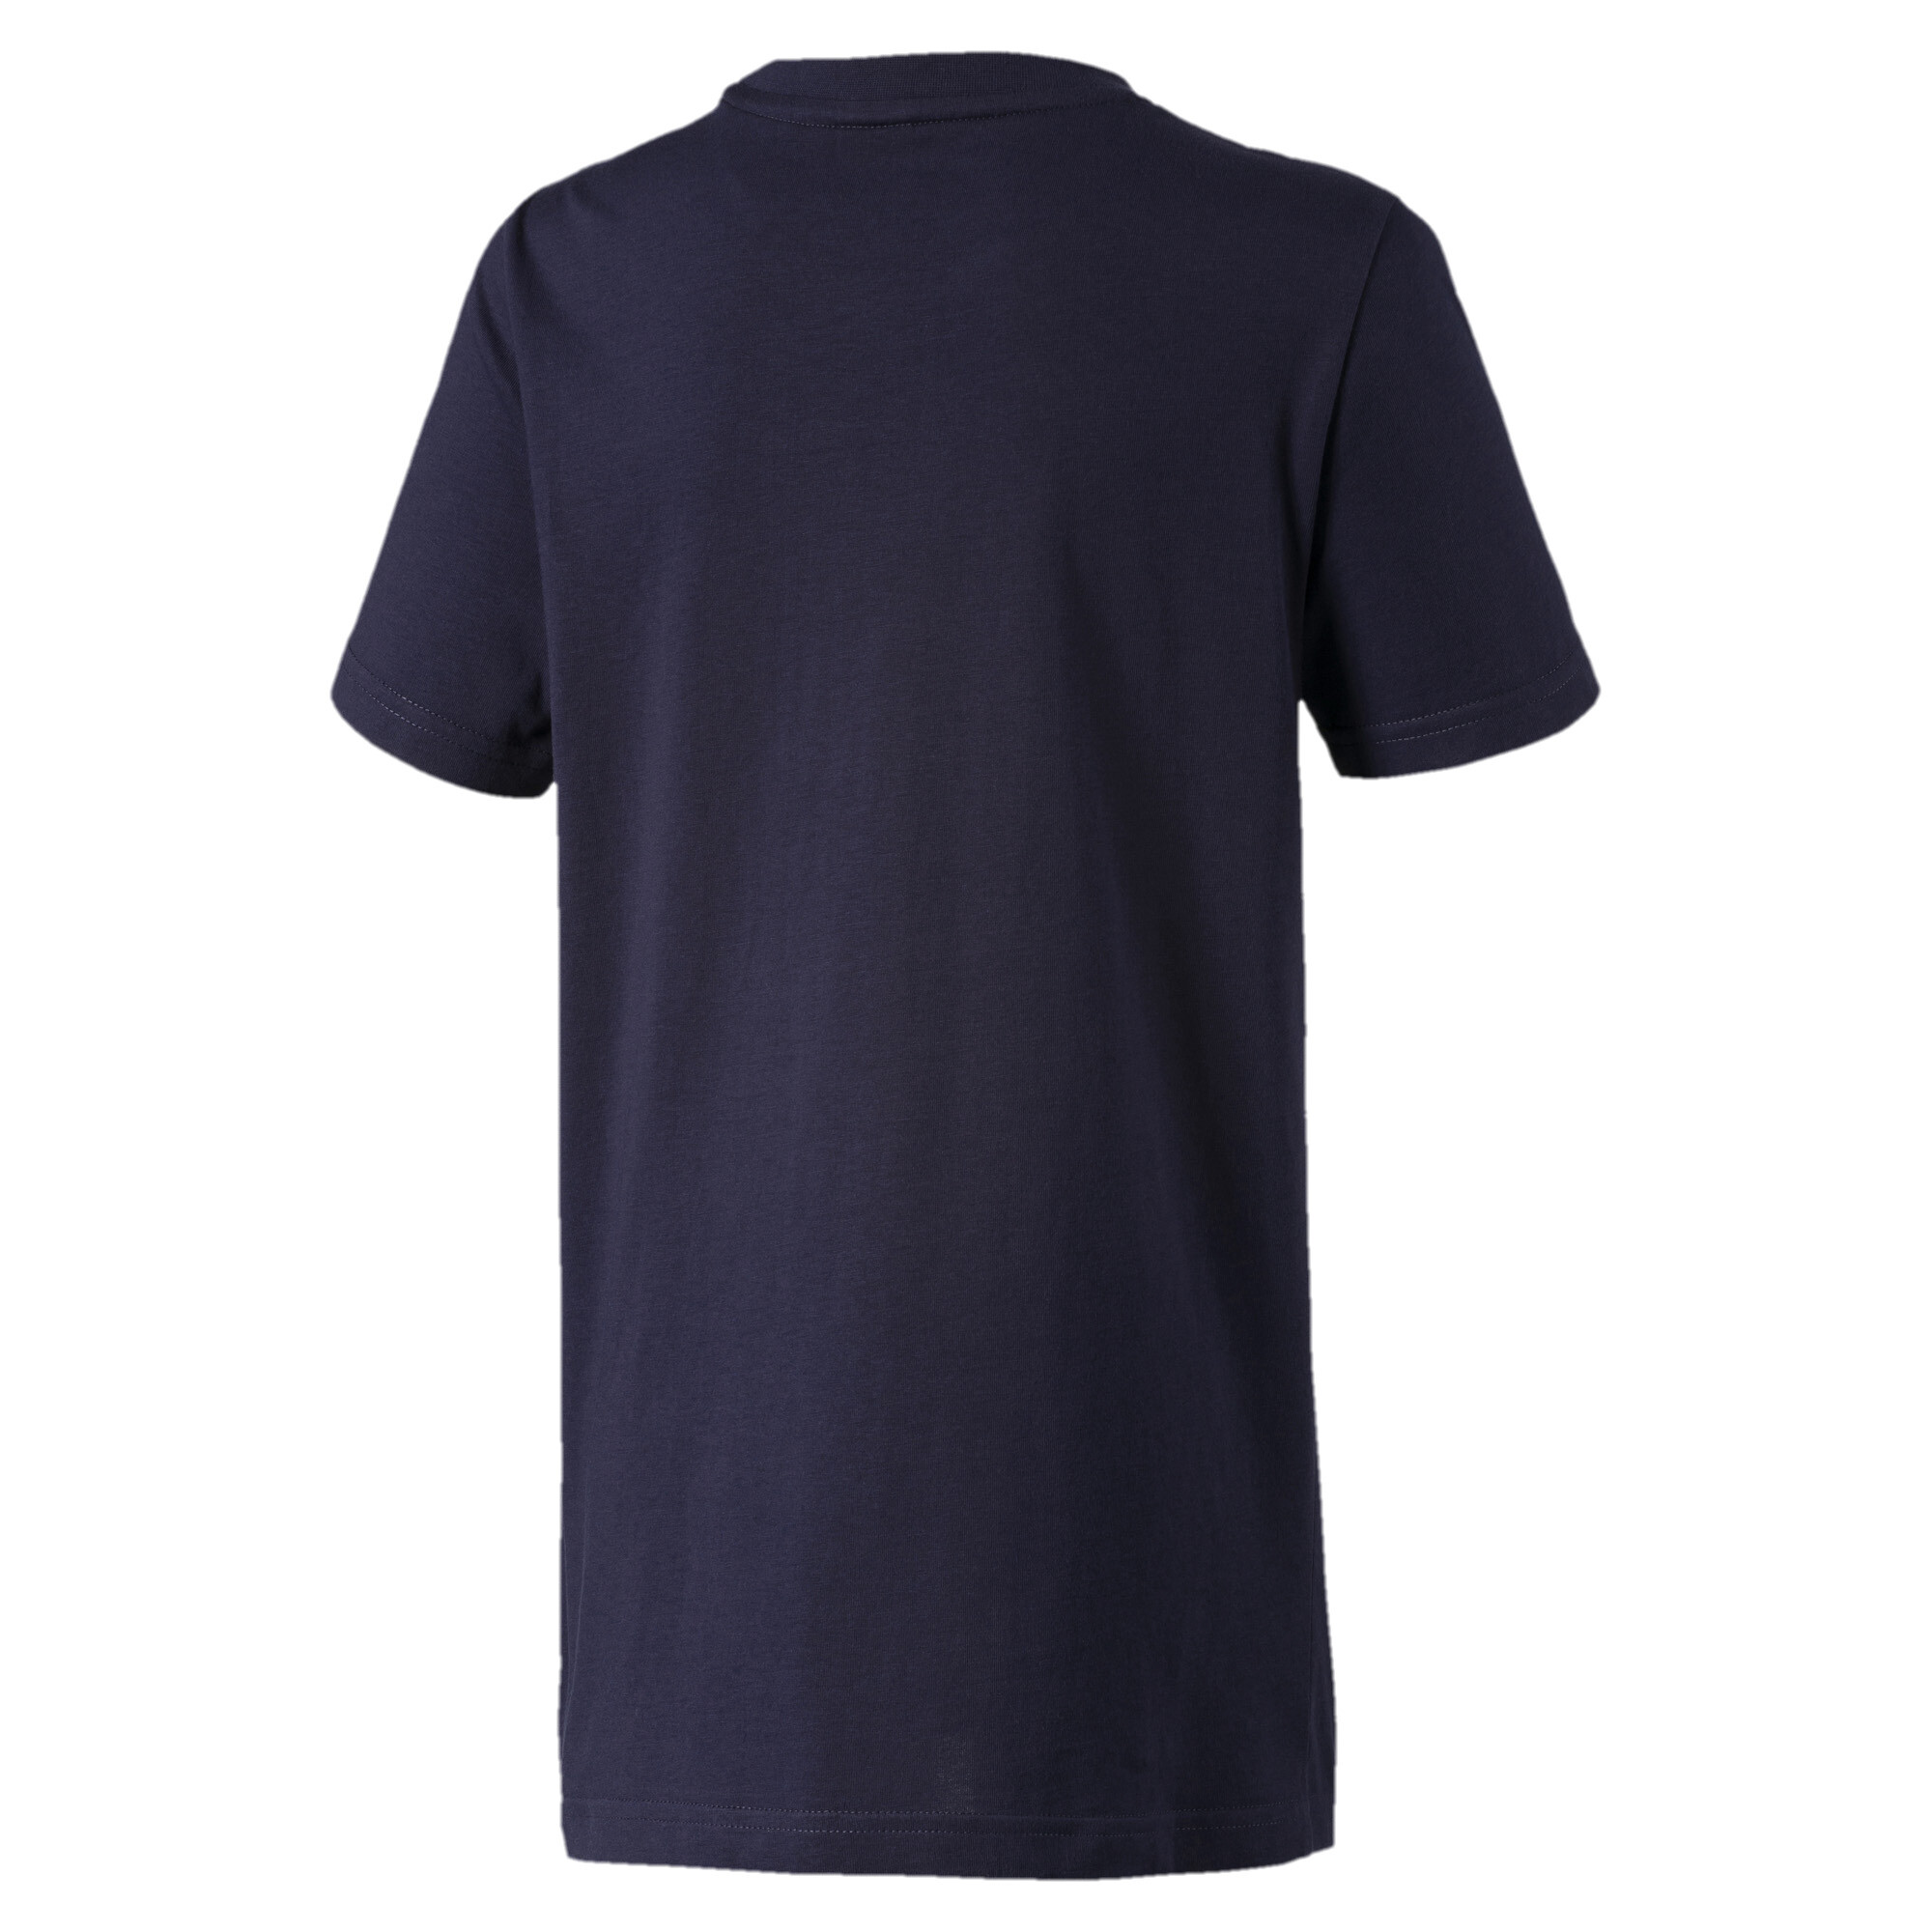 Puma Classics Short Sleeve Boys' T-Shirt, Blue, Size 14, Clothing